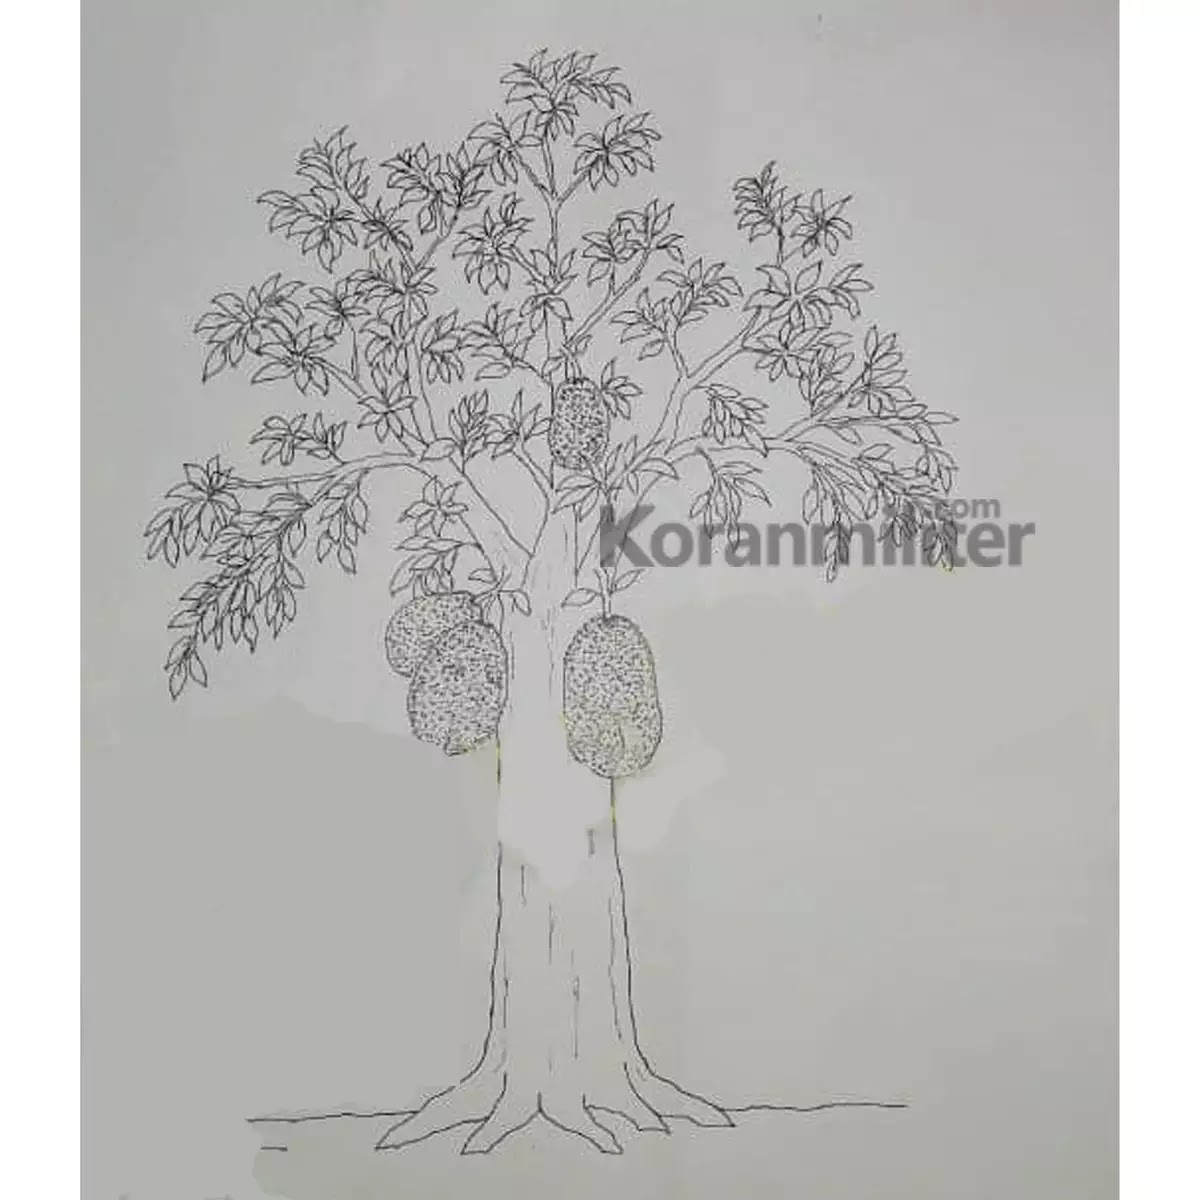 Arti Psikotes Gambar Rumah Pohon Orang Psikotes gambar pohon